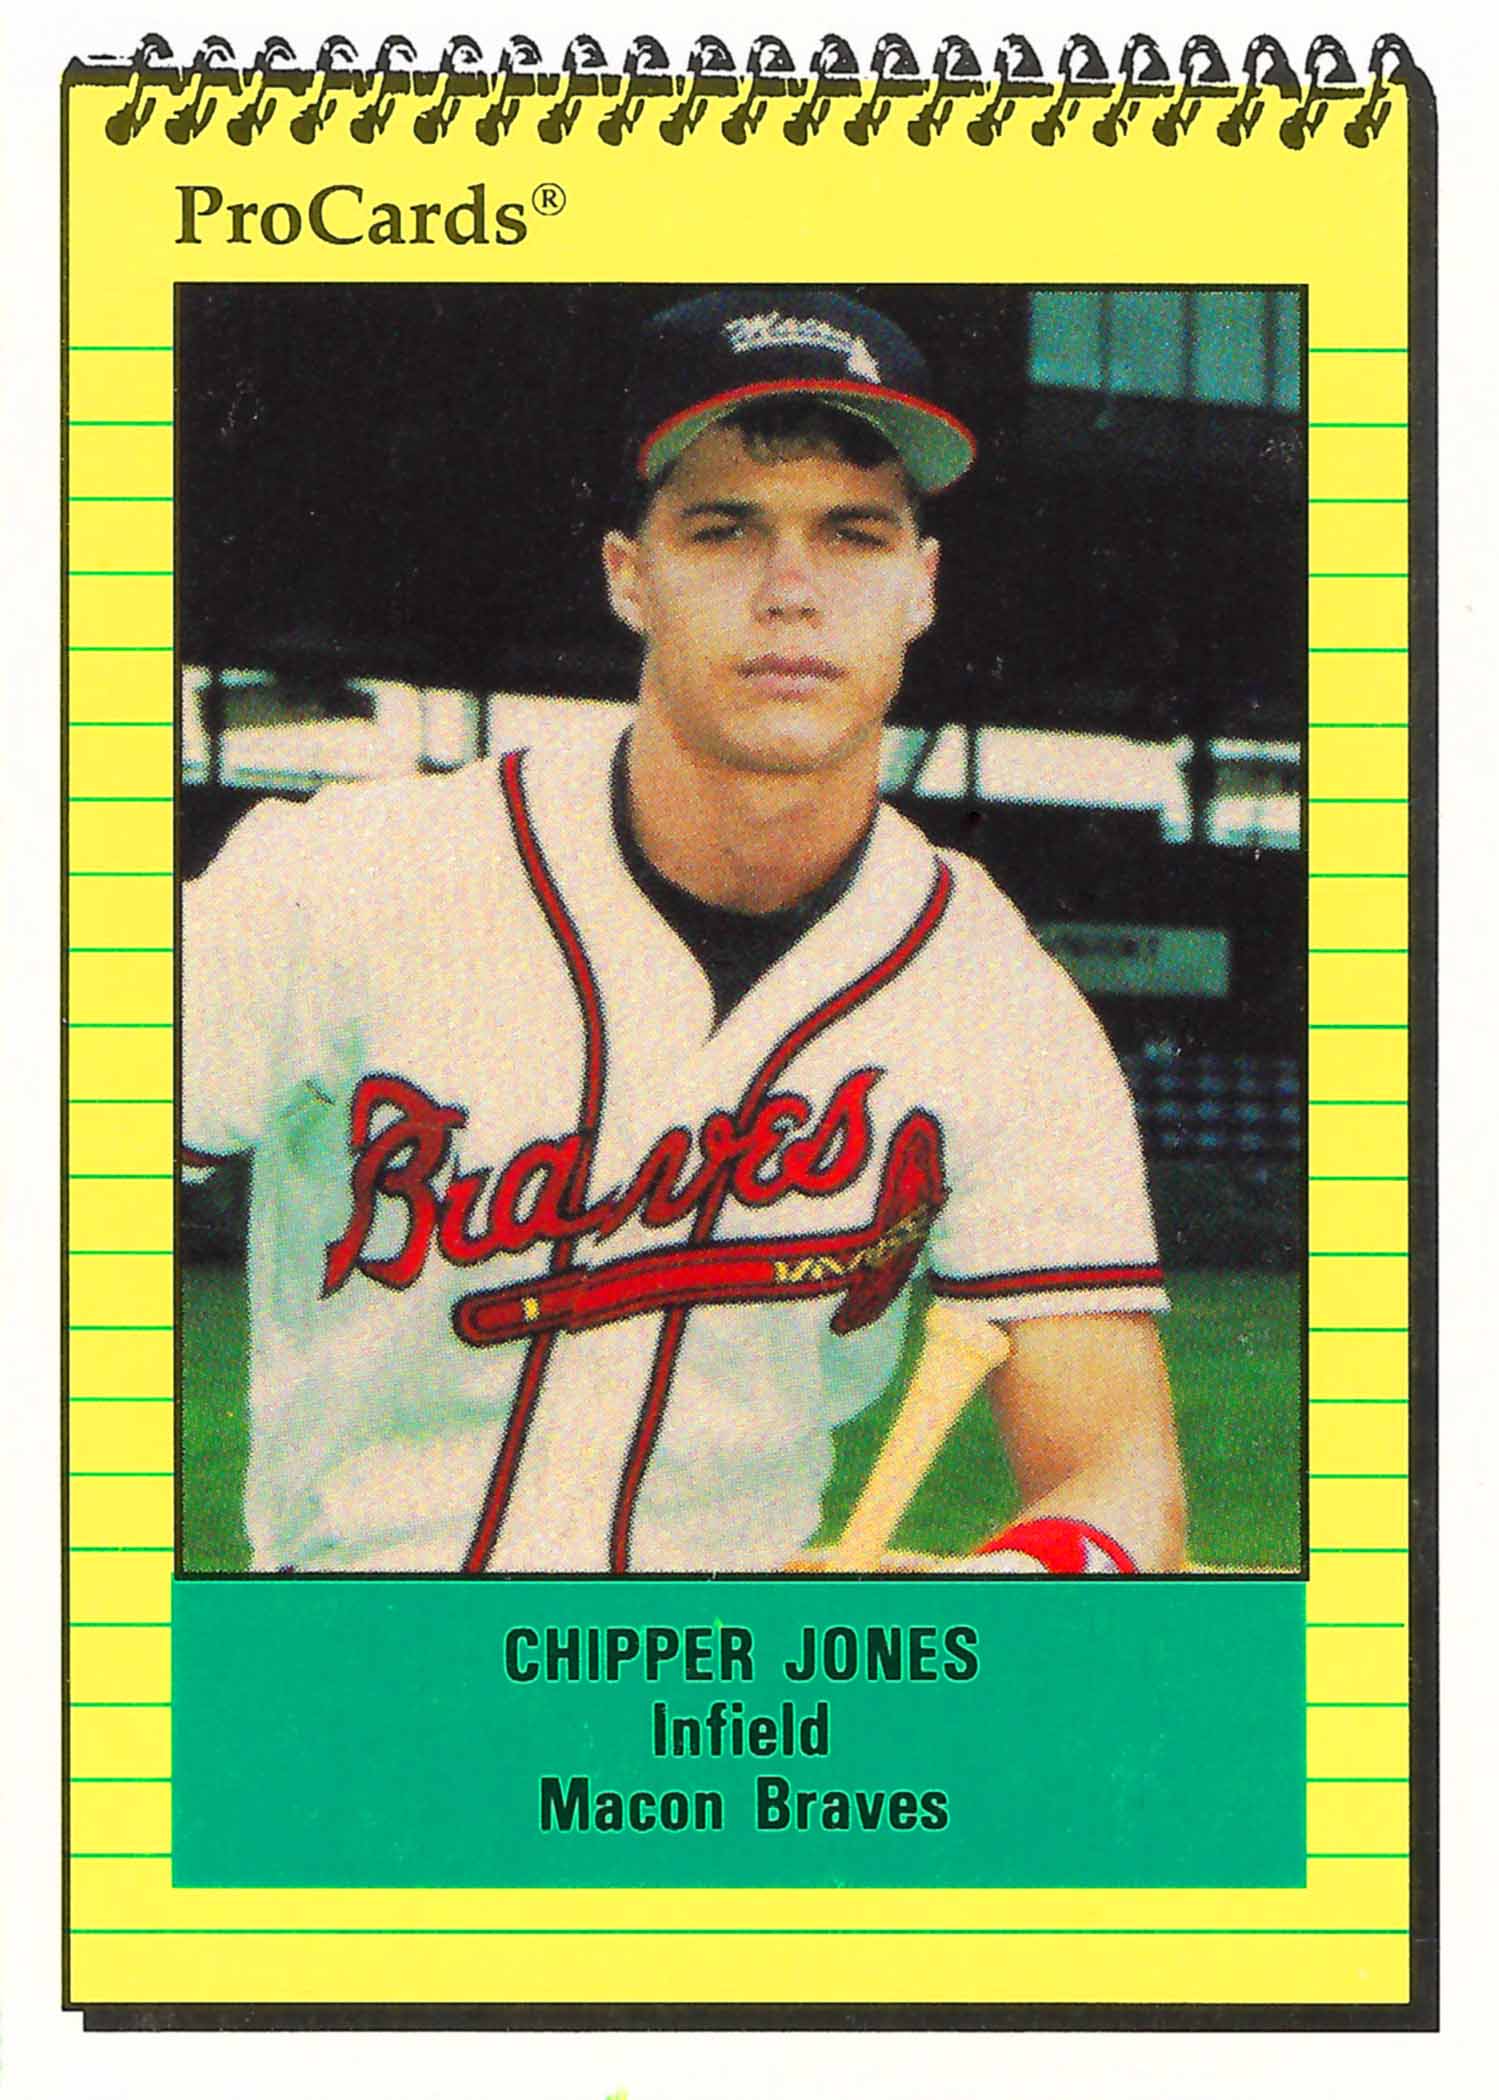 2012 MLB All-Star Game: National League Wins, Chipper Jones